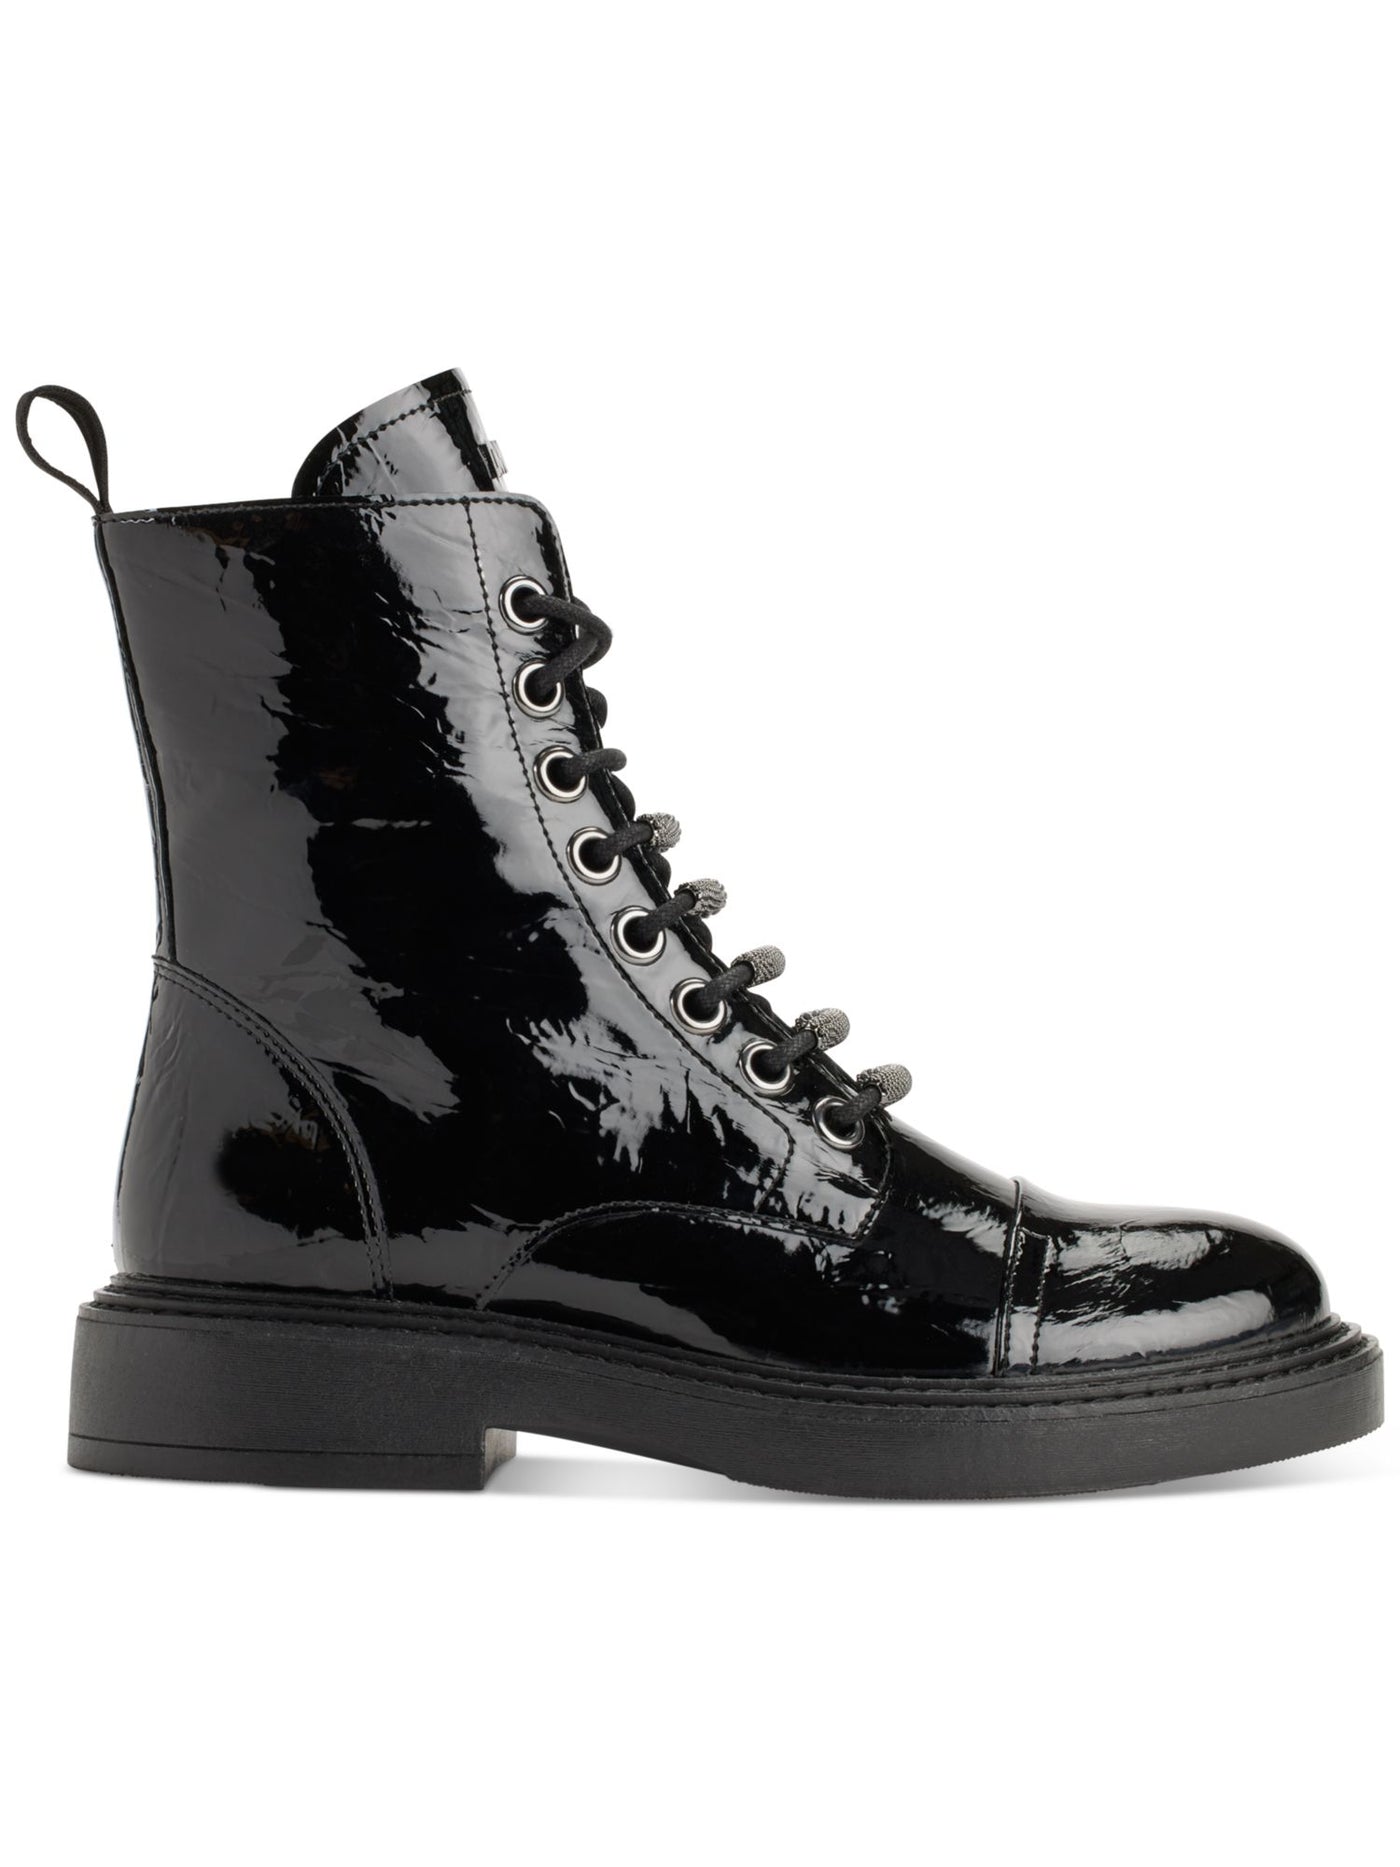 DKNY Womens Black Metallic Malaya Almond Toe Block Heel Lace-Up Combat Boots 6.5 M